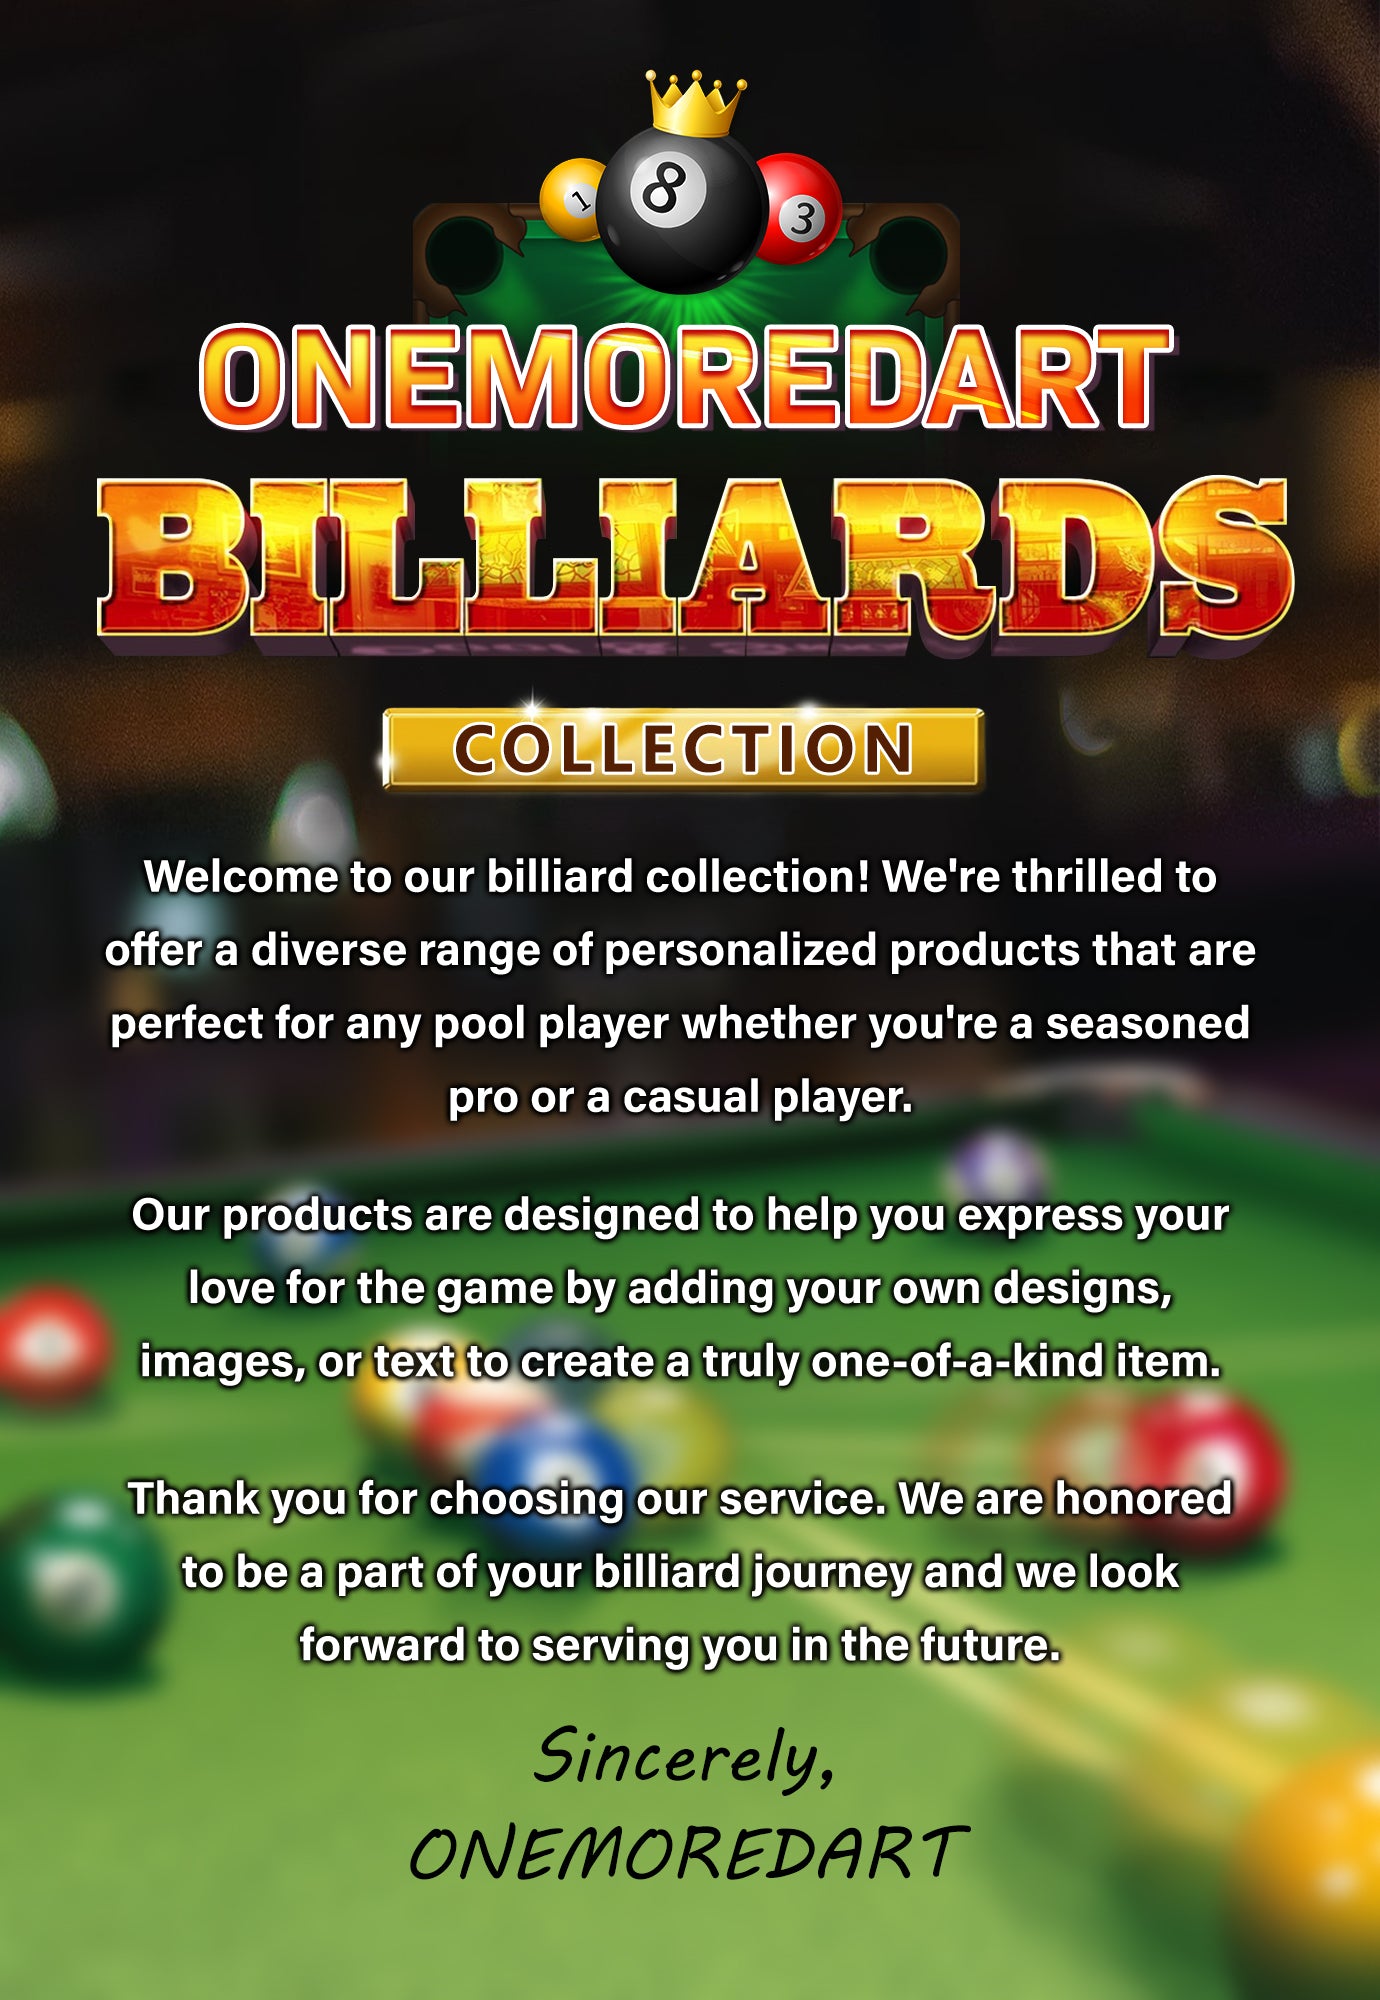 Dragon Team Billiard Pool 8 Ball On Fire Personalized Name 3D Polo Shirt Gift For Billiard Players QB95